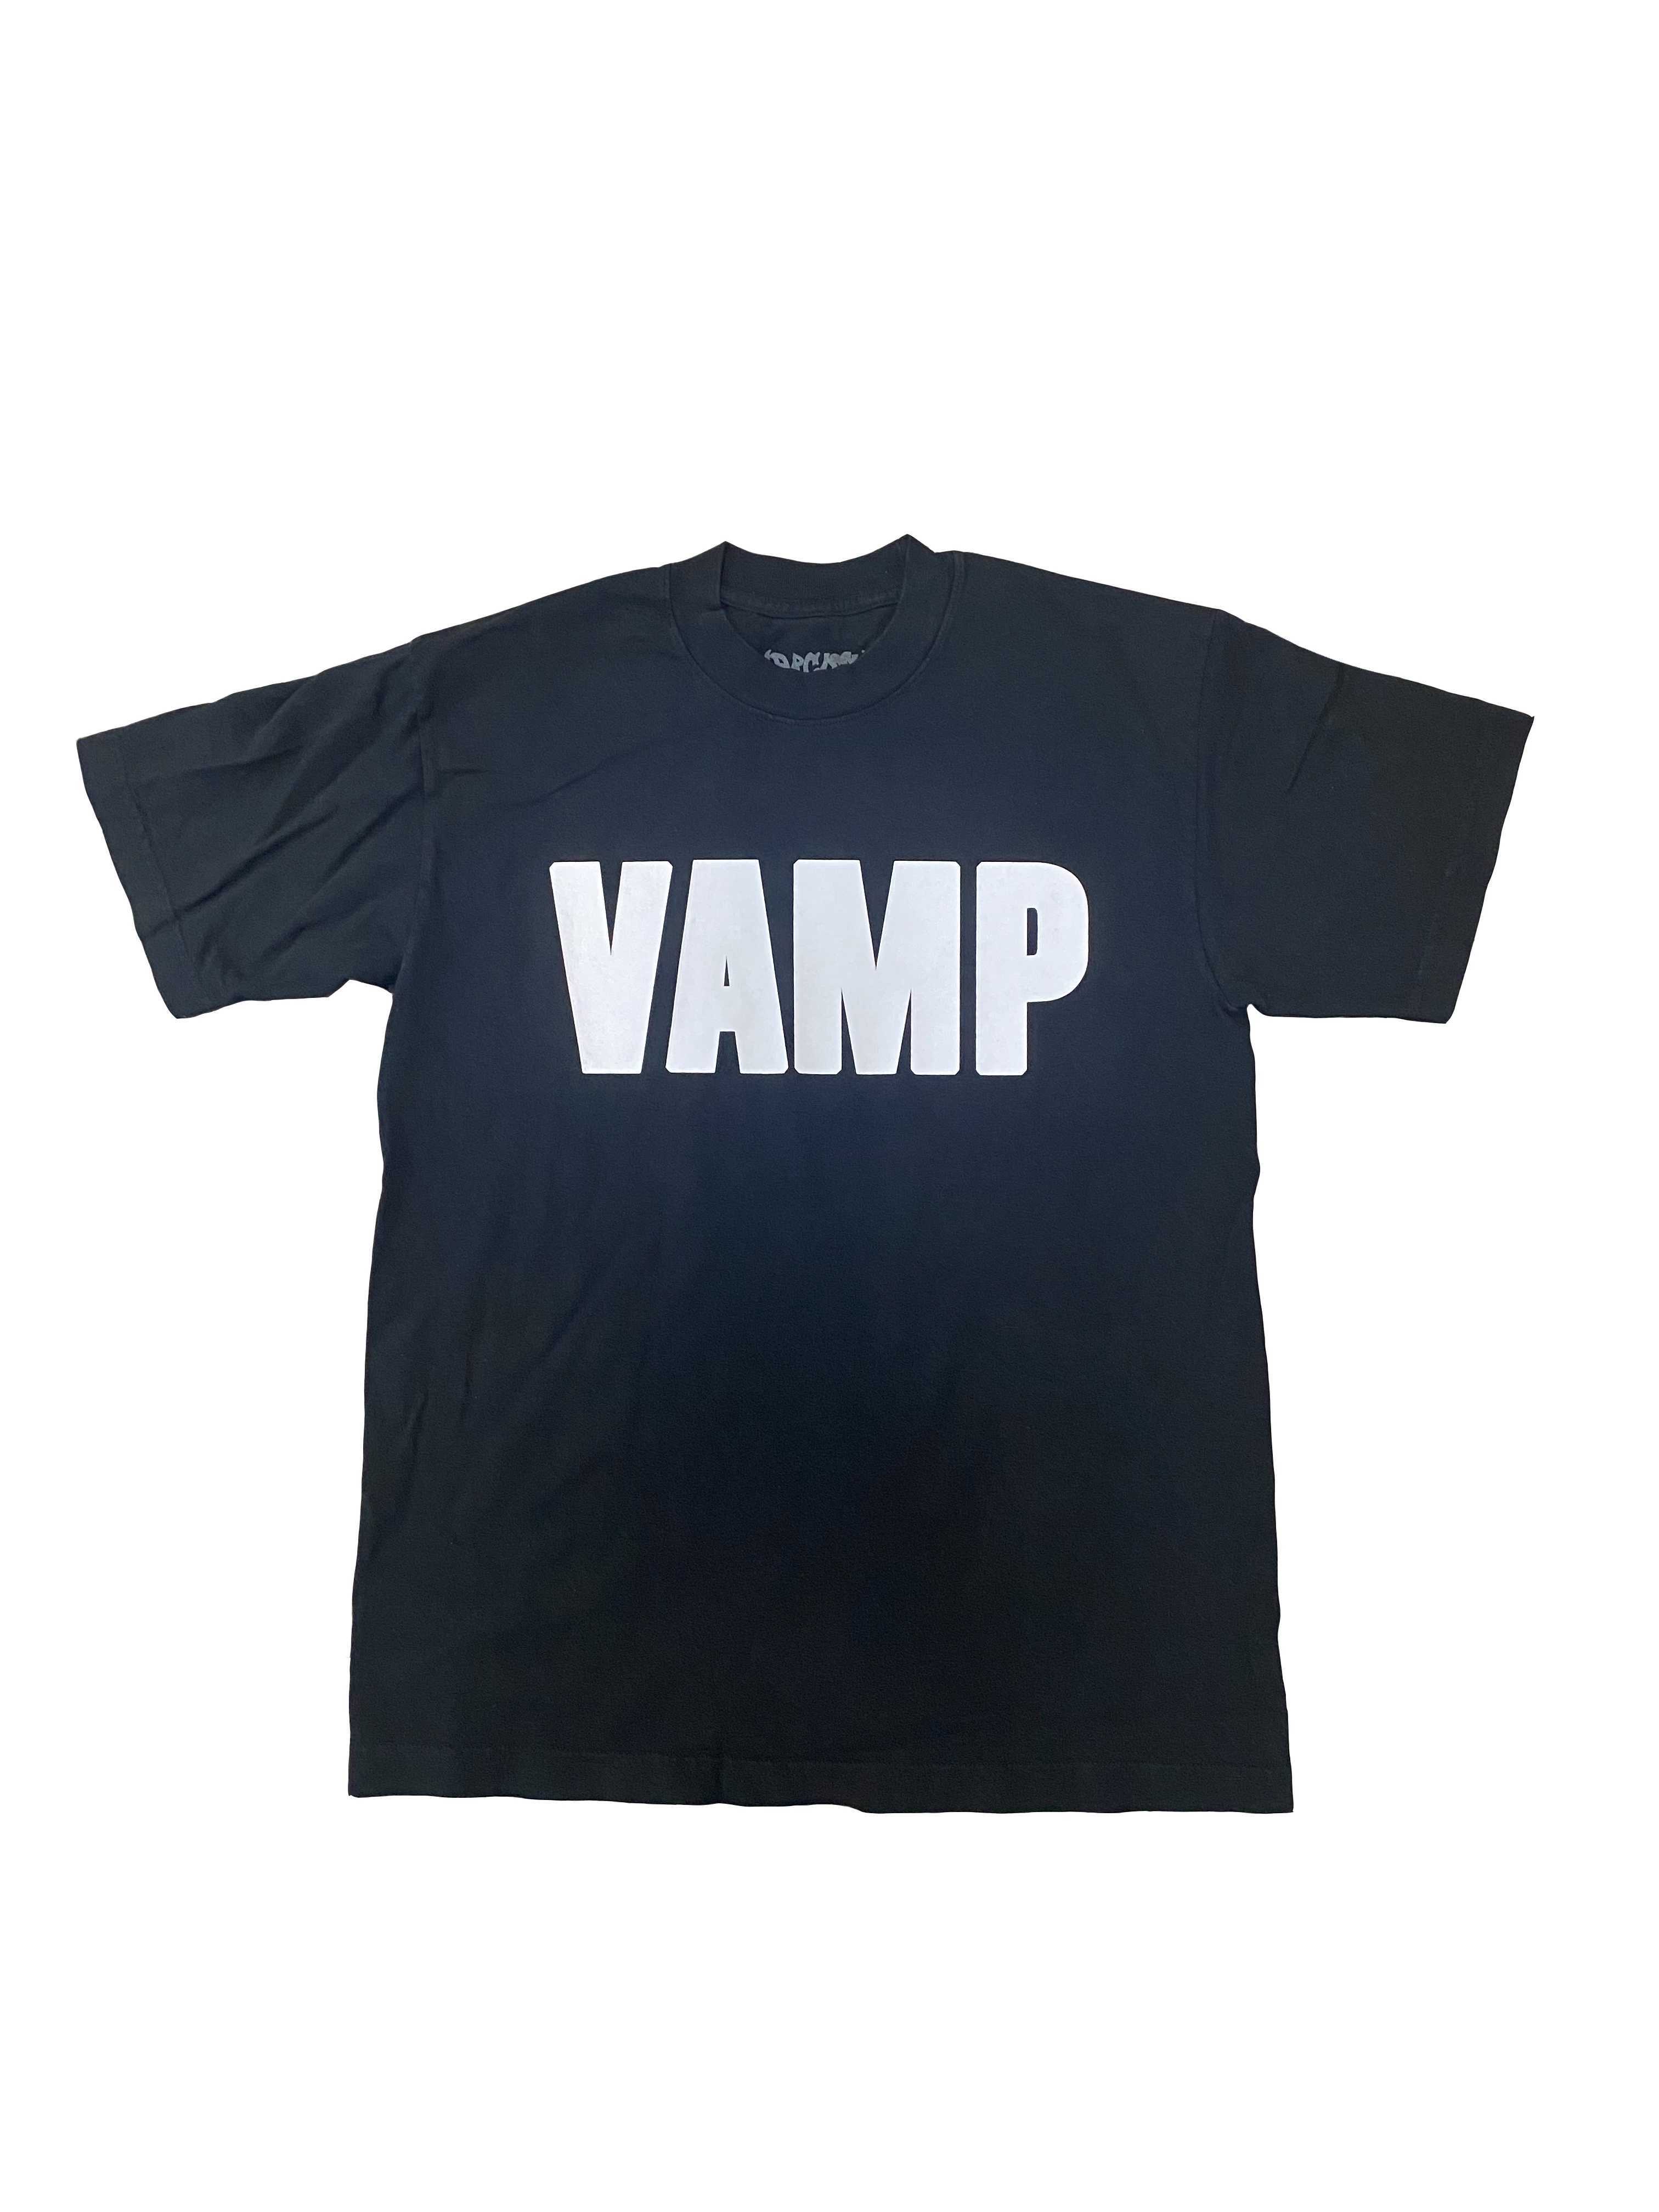 Playboi Carti Narcissist Tour Vamp T-shirt Black - FW21 メンズ - JP